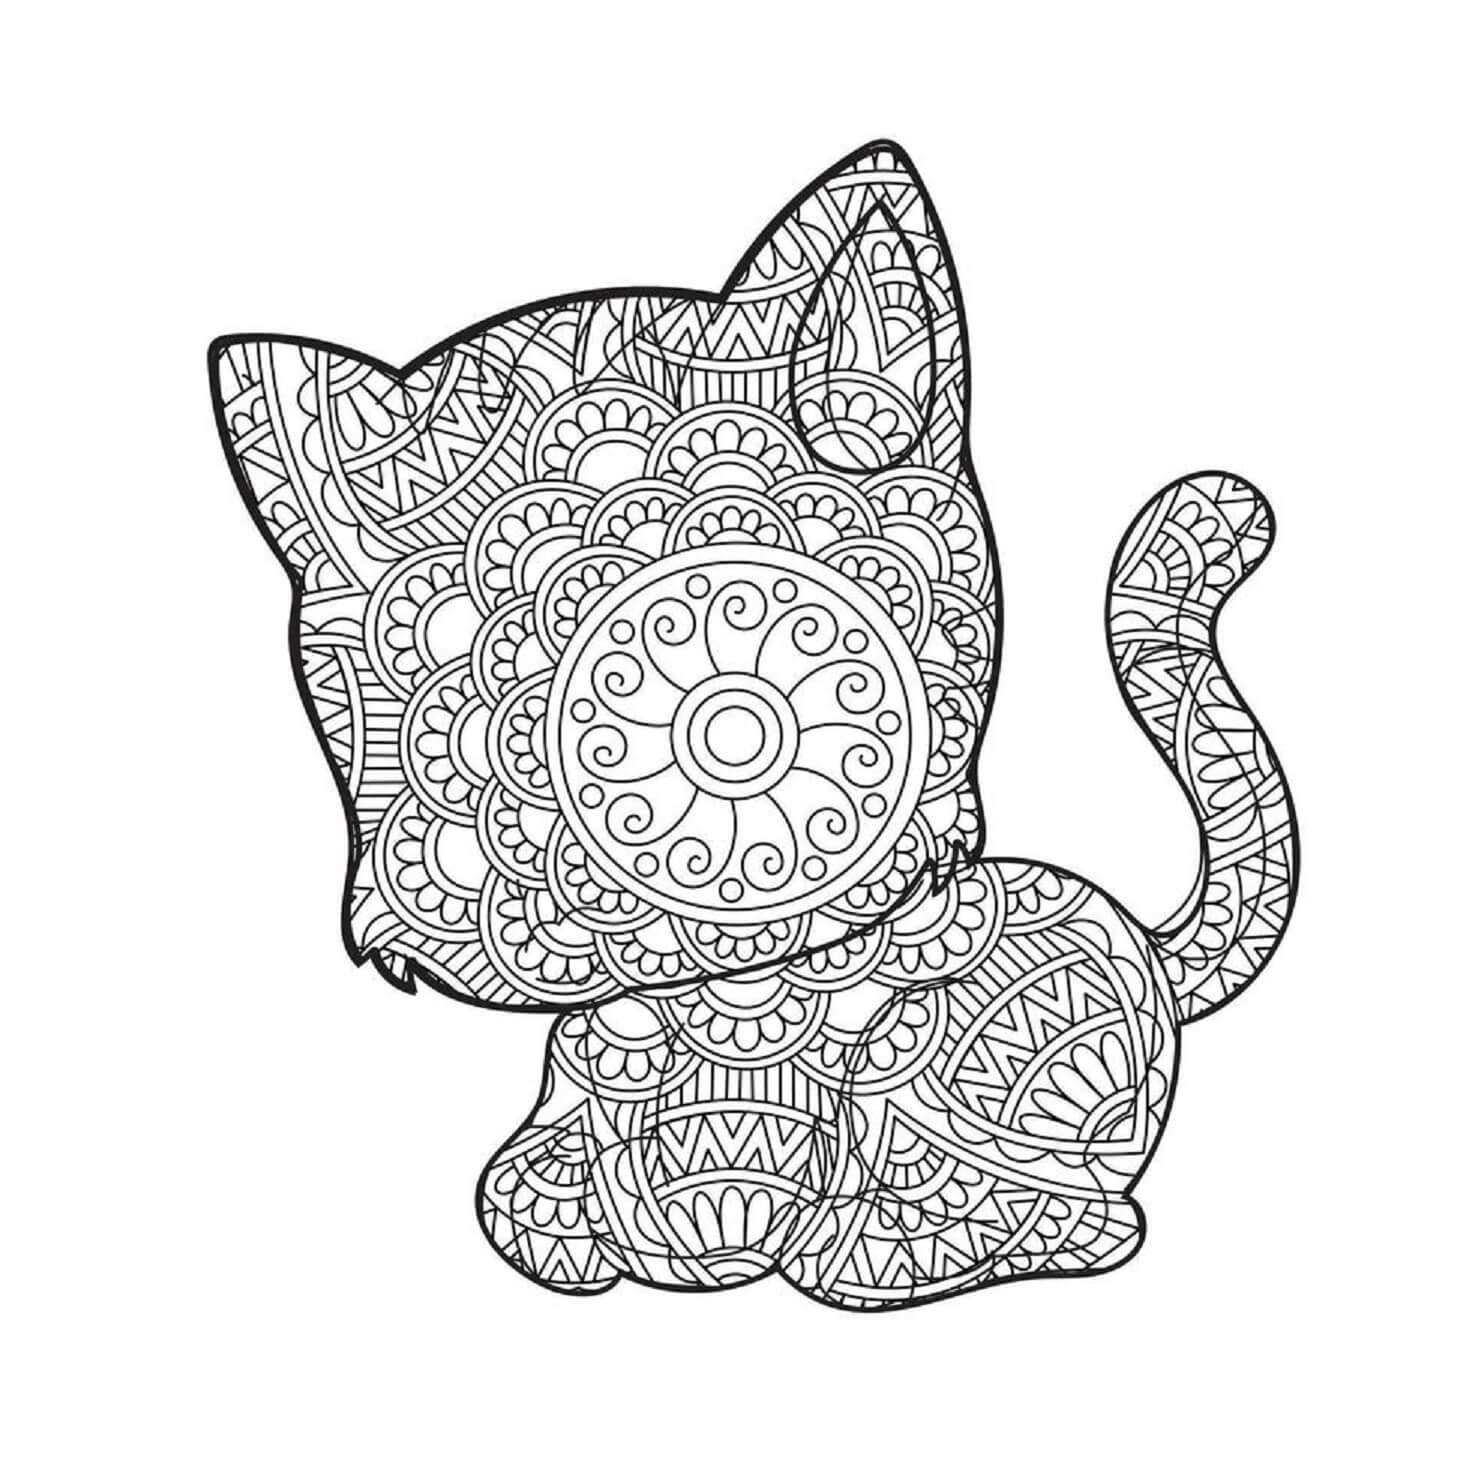 Descarga gratuita de Mandala de Gato para colorir